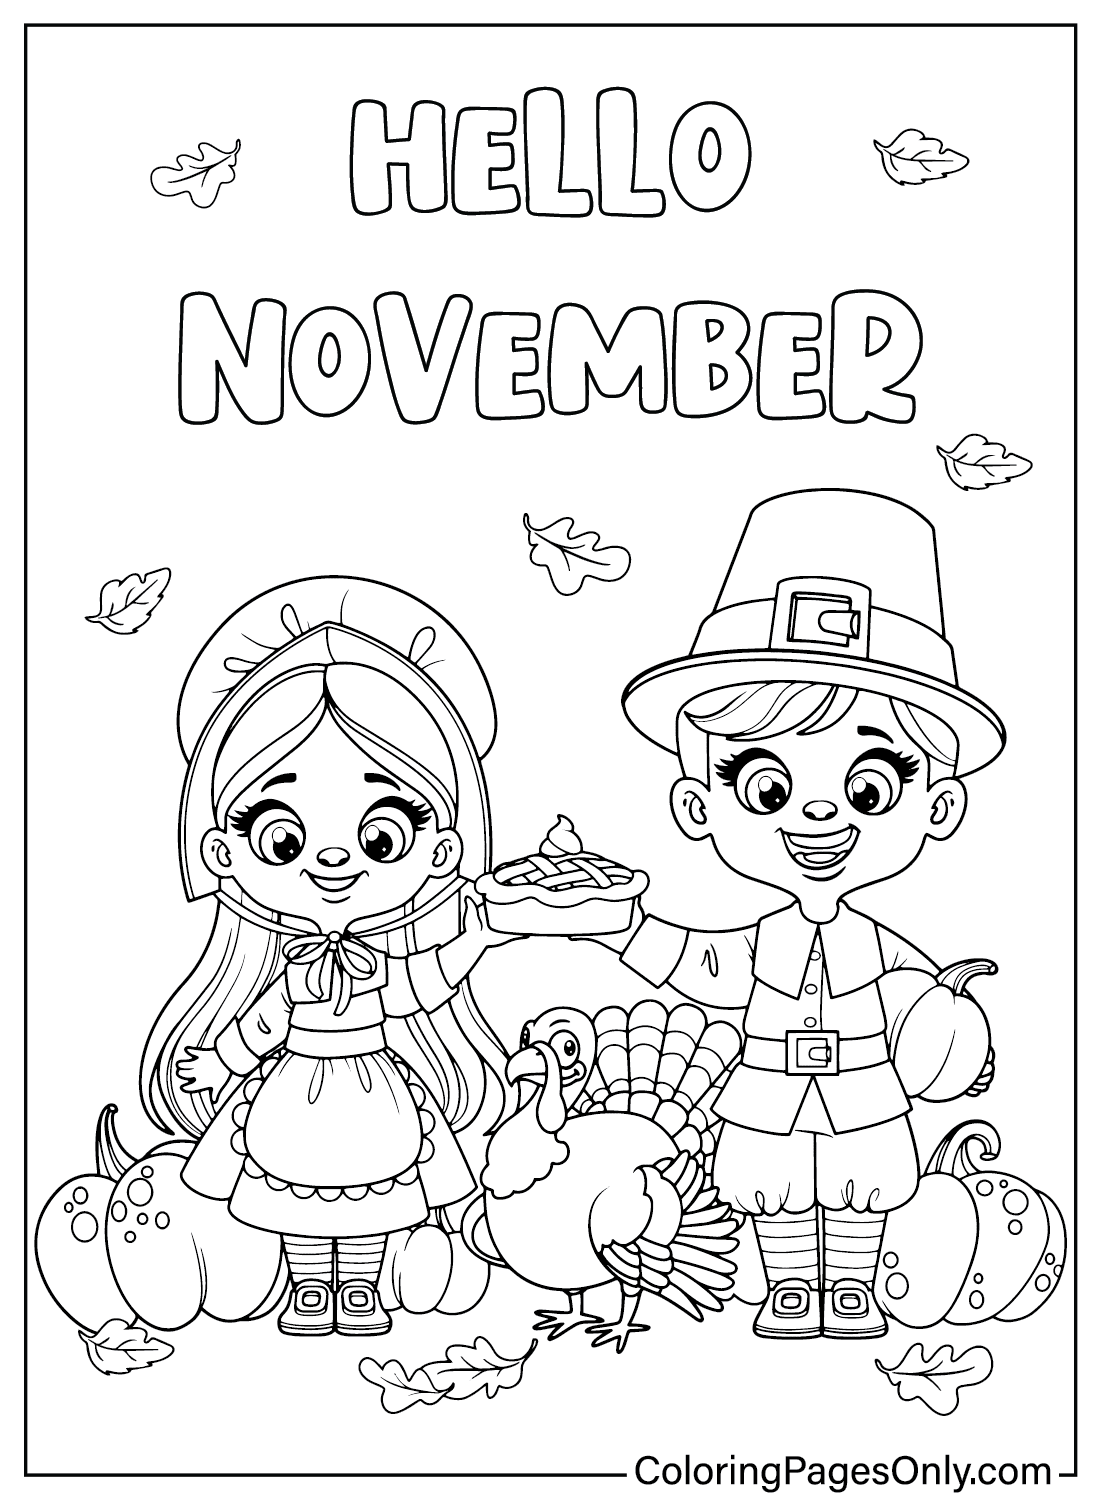 Hello November Coloring Page